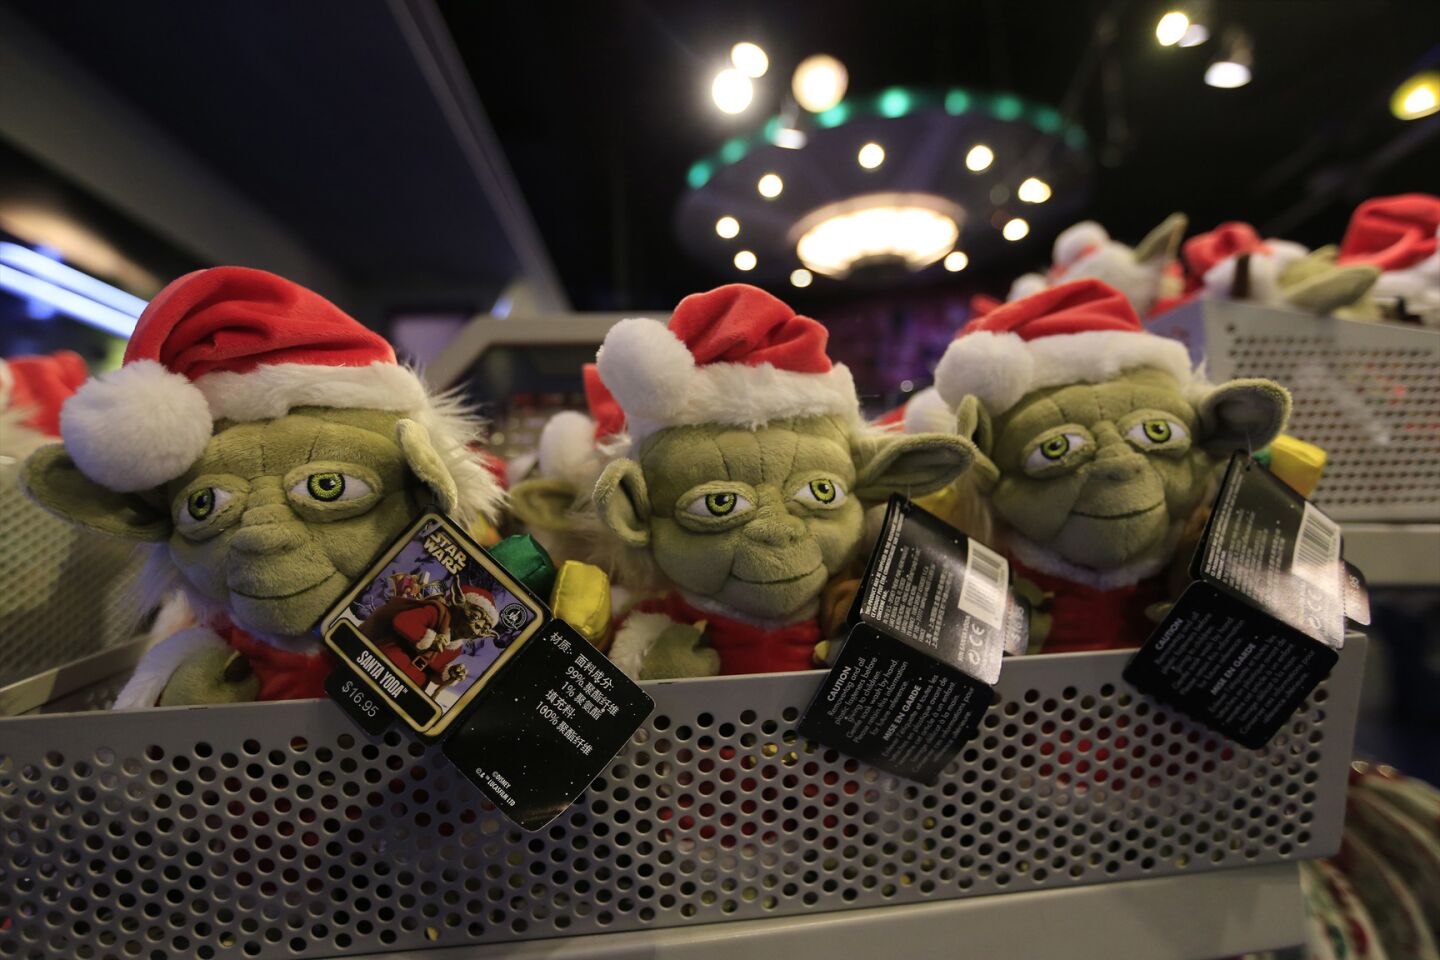 'Season of The Force' Arrives At Disneyland